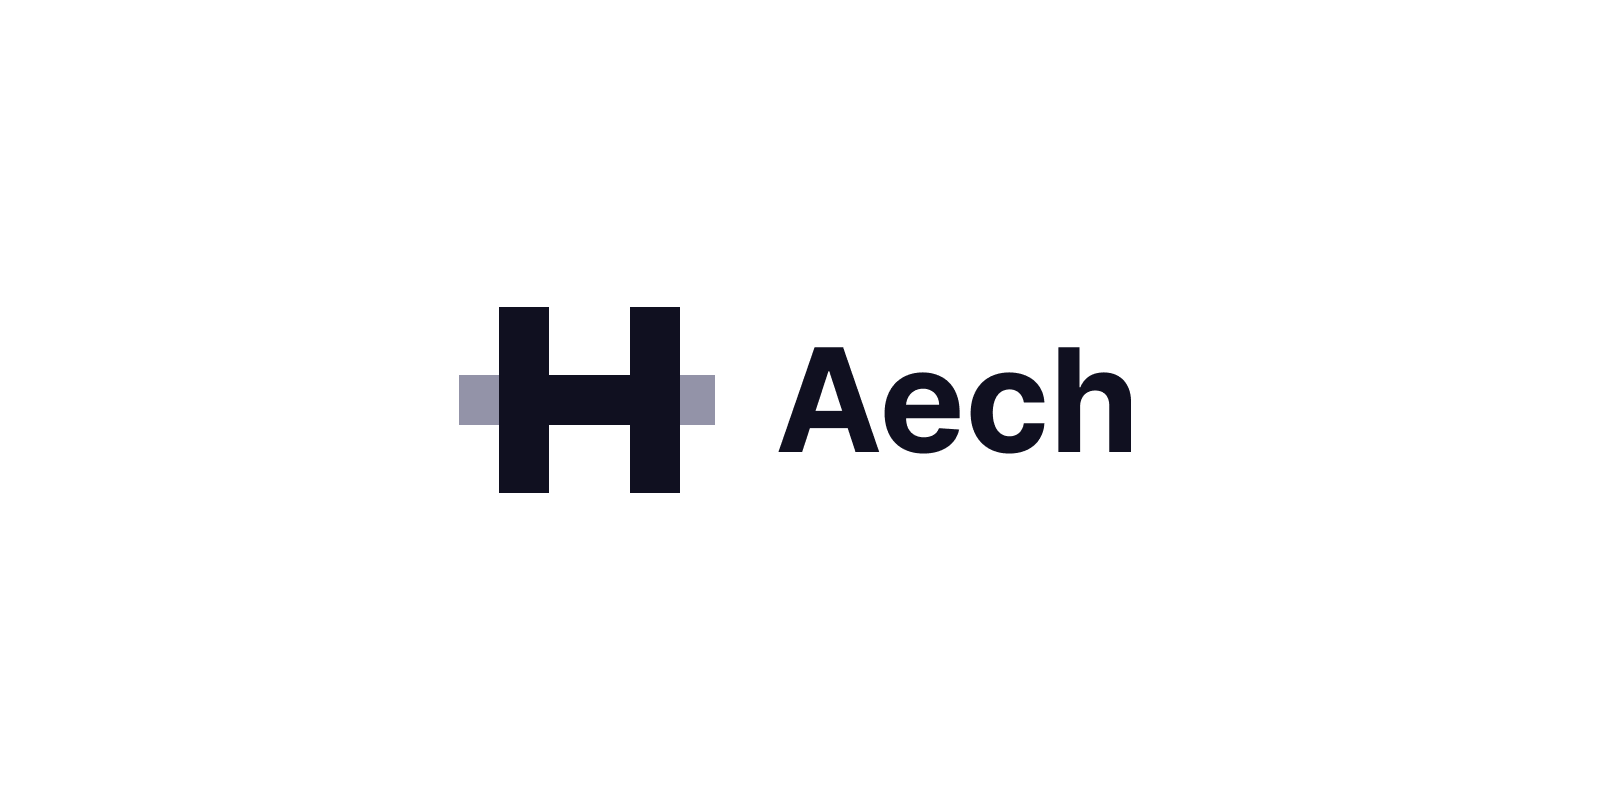 Aech logo